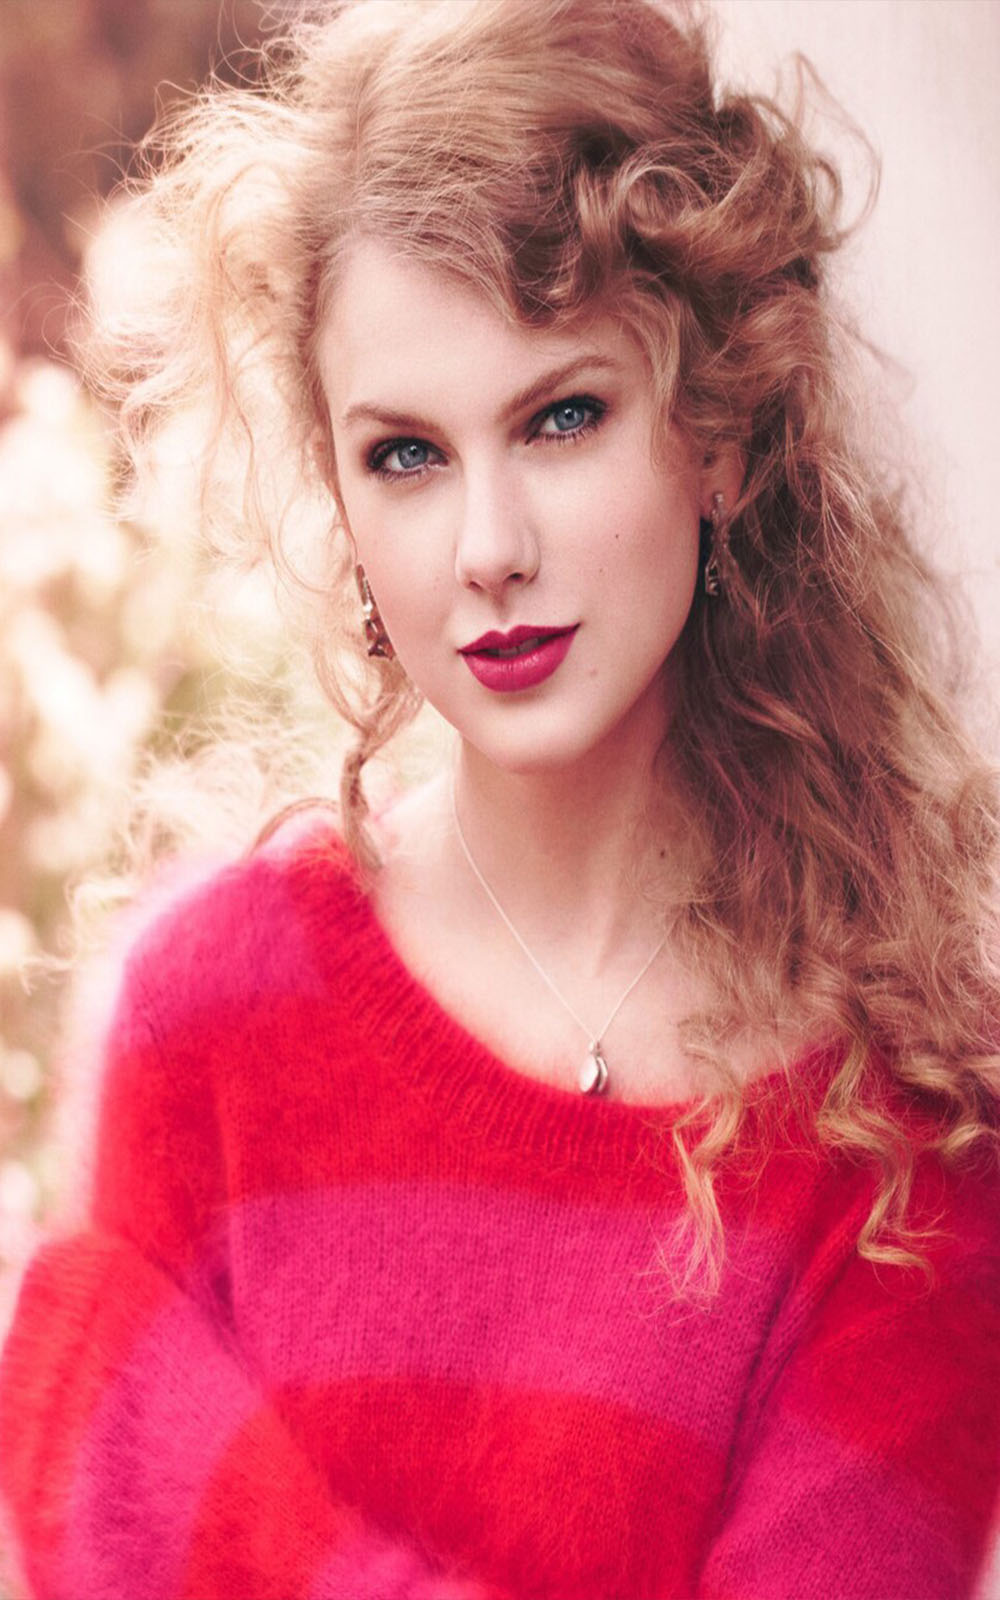 Taylor swift in pink dress